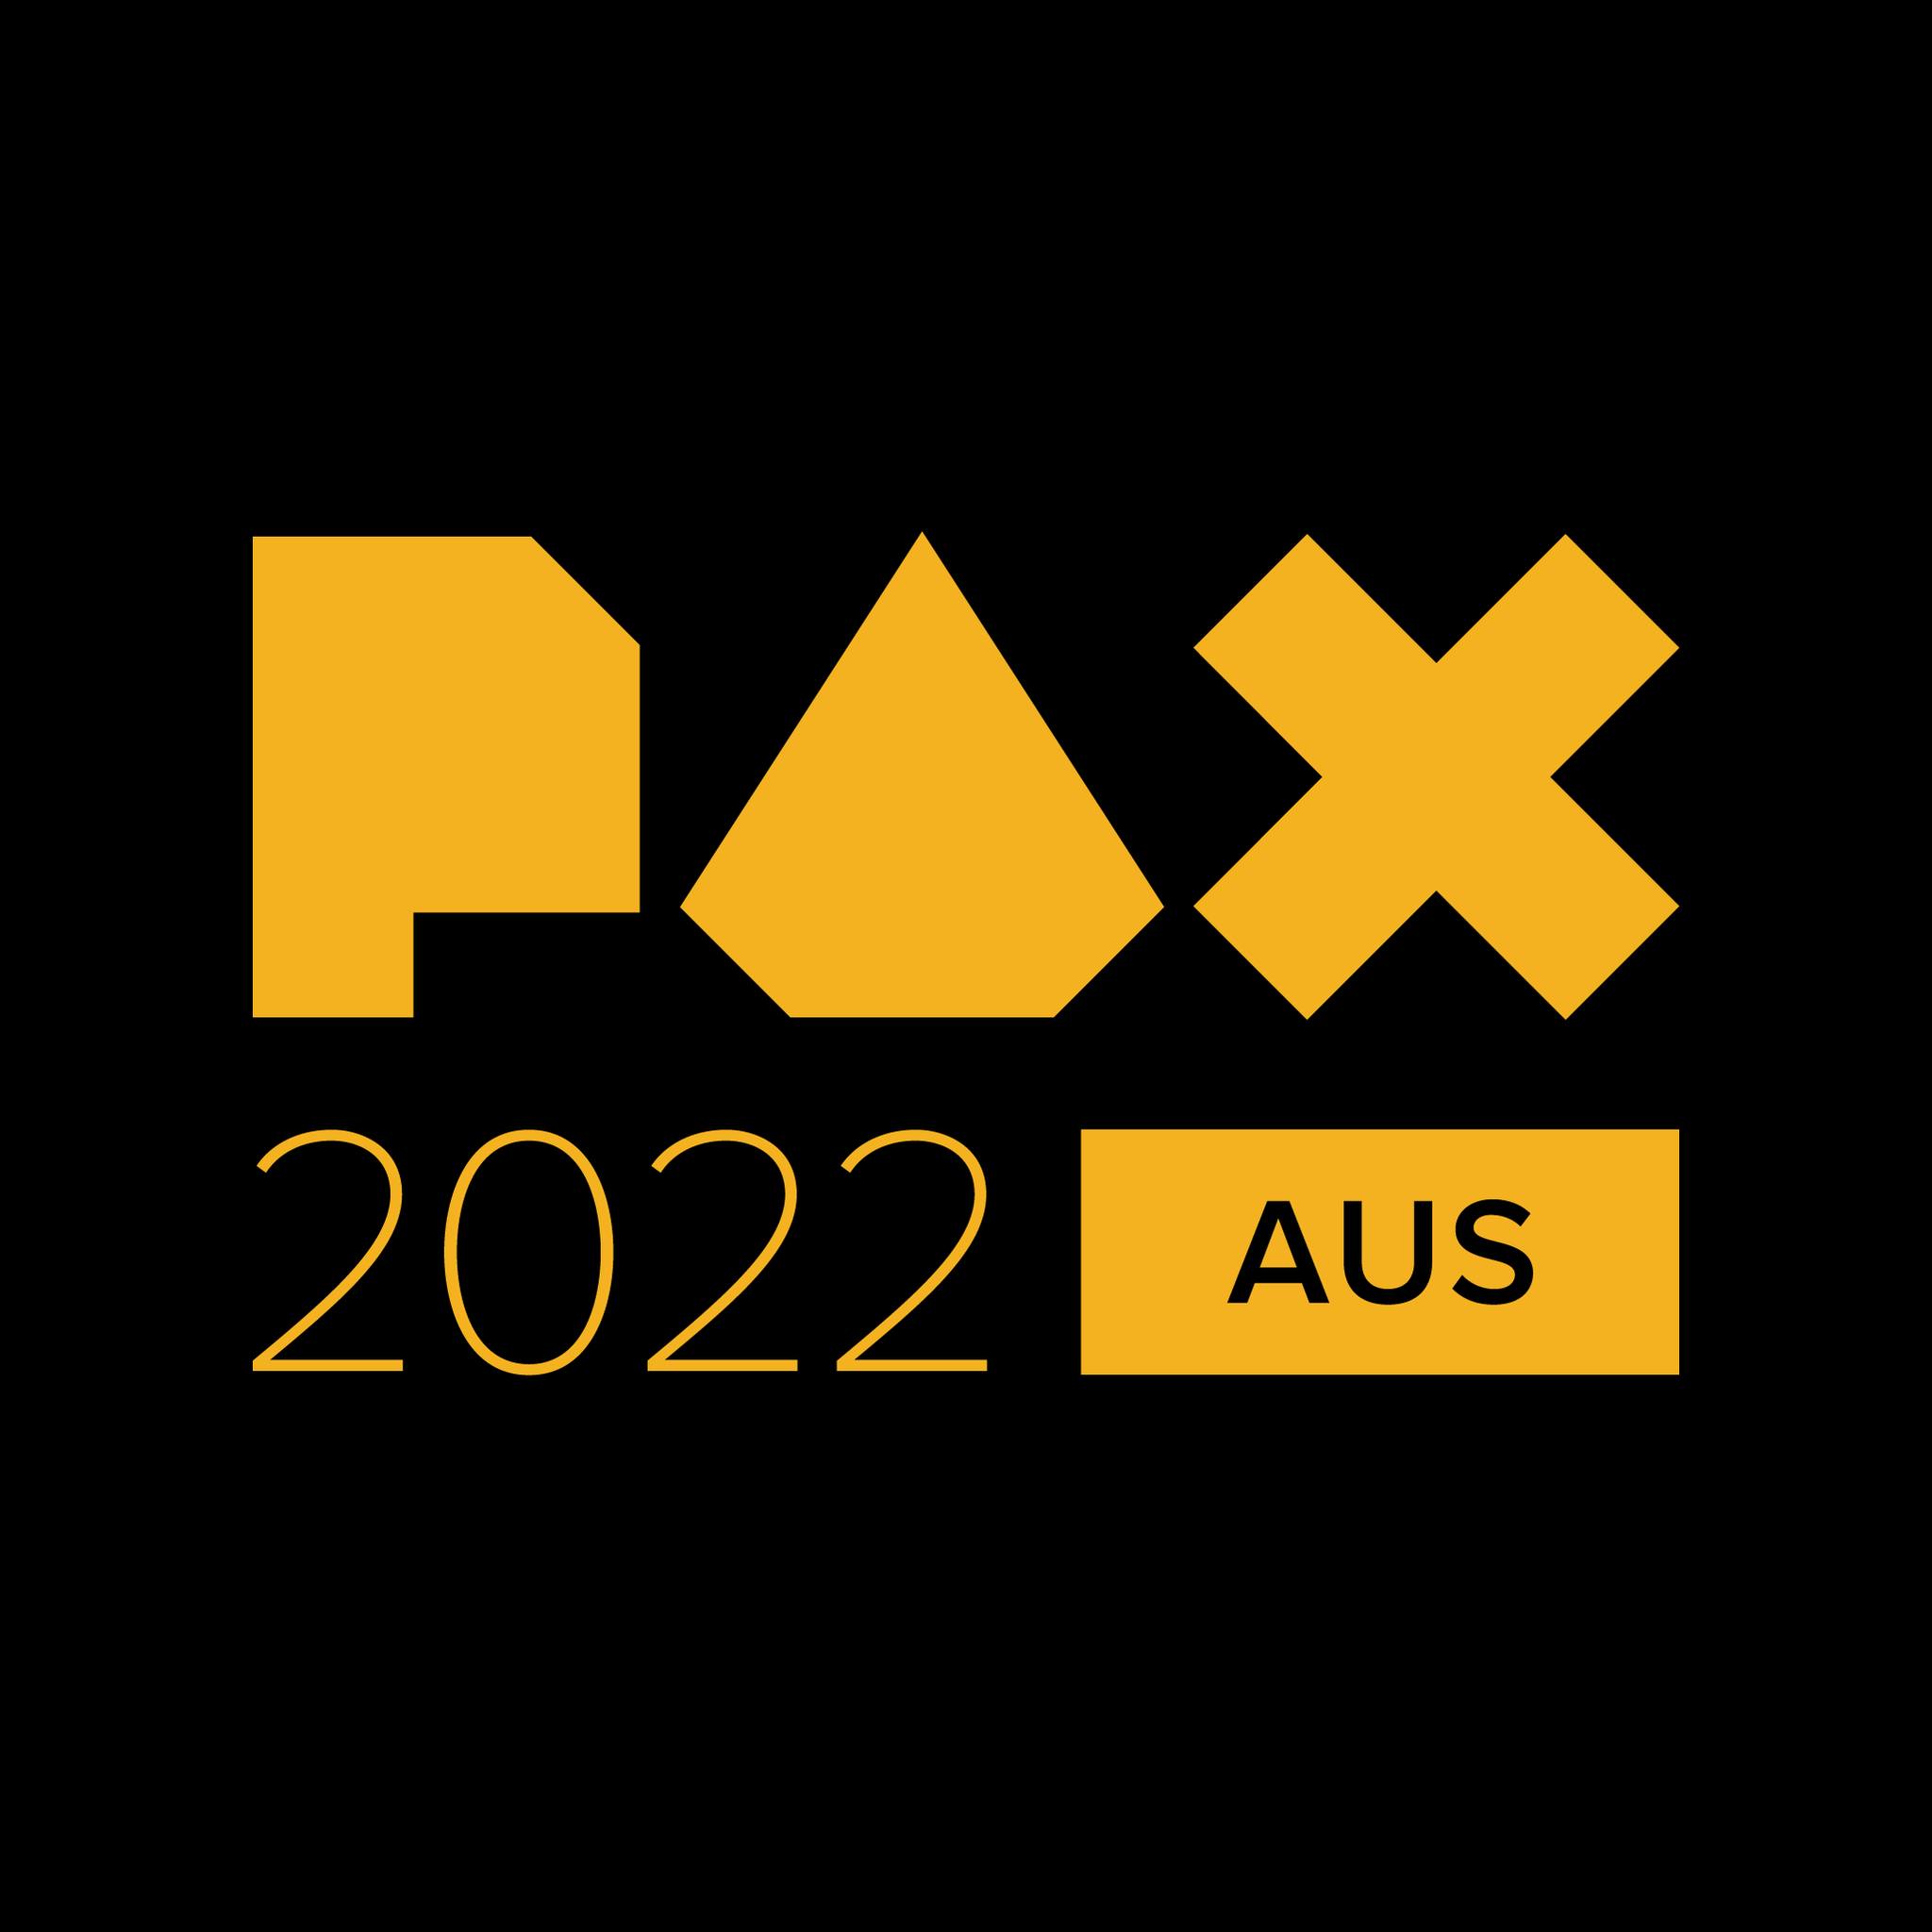 Square-Enix, Sega, Devolver Digital and more will feature at PAX Aus 2022